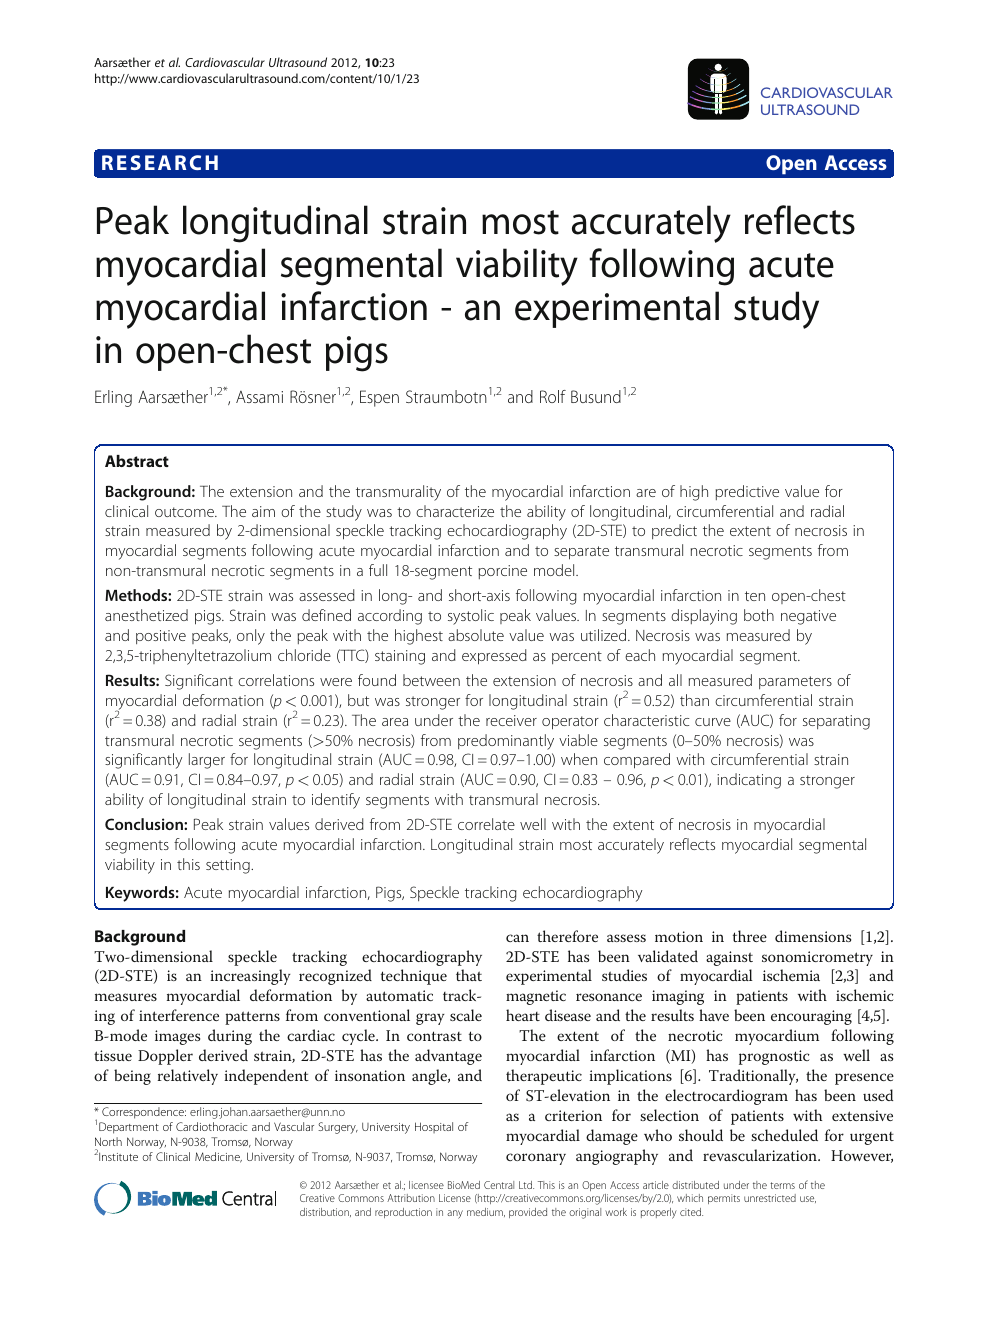 Segmental Speckle Tracking longitudinal strain analysis. Segmental